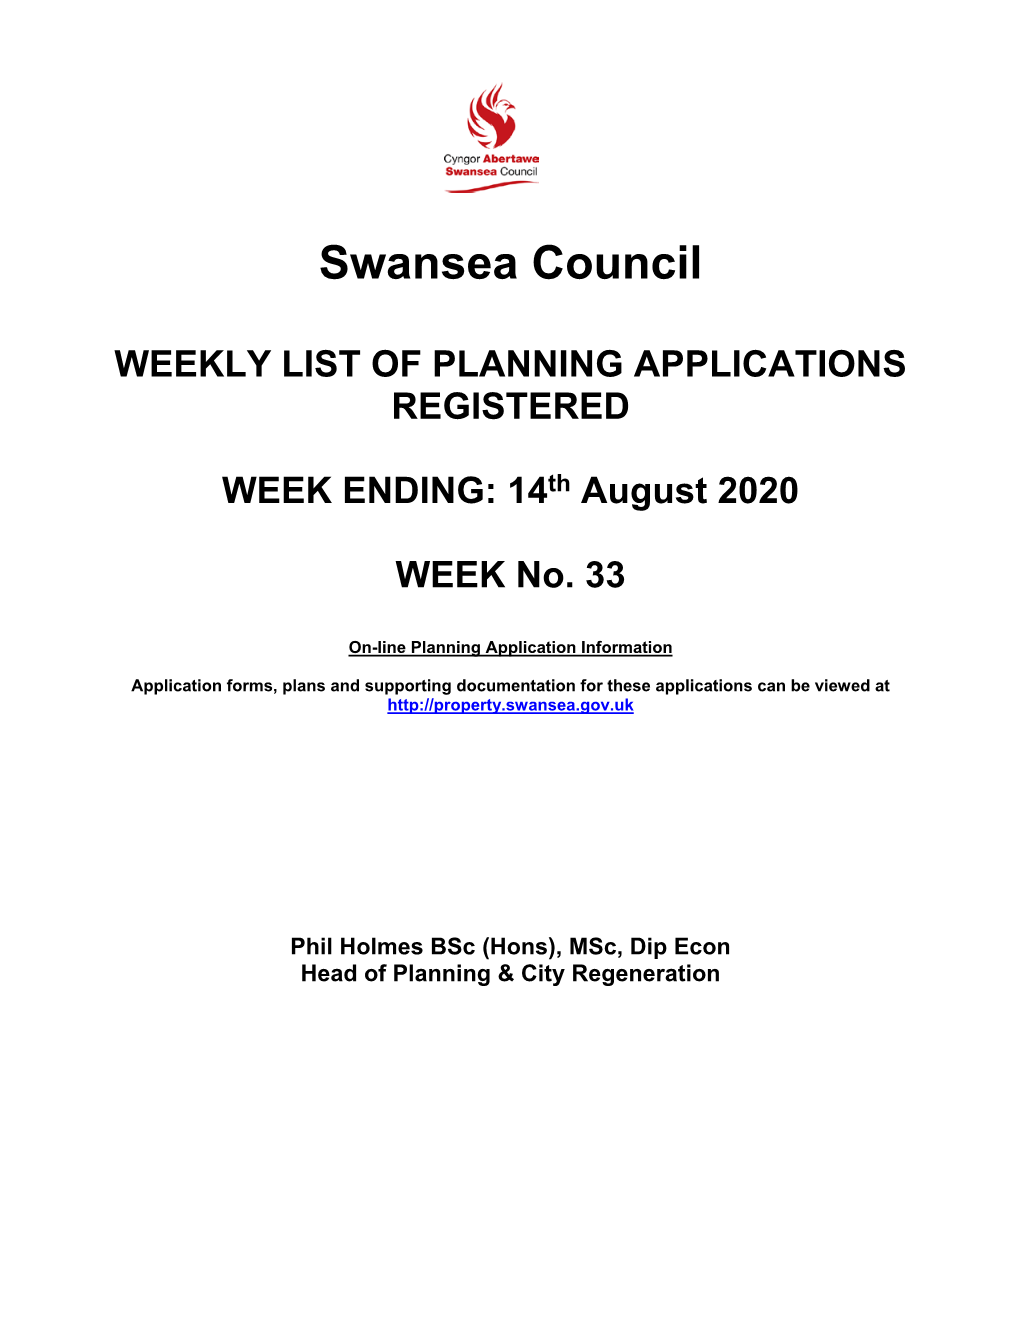 Applications for Week Ending 14 August 2020